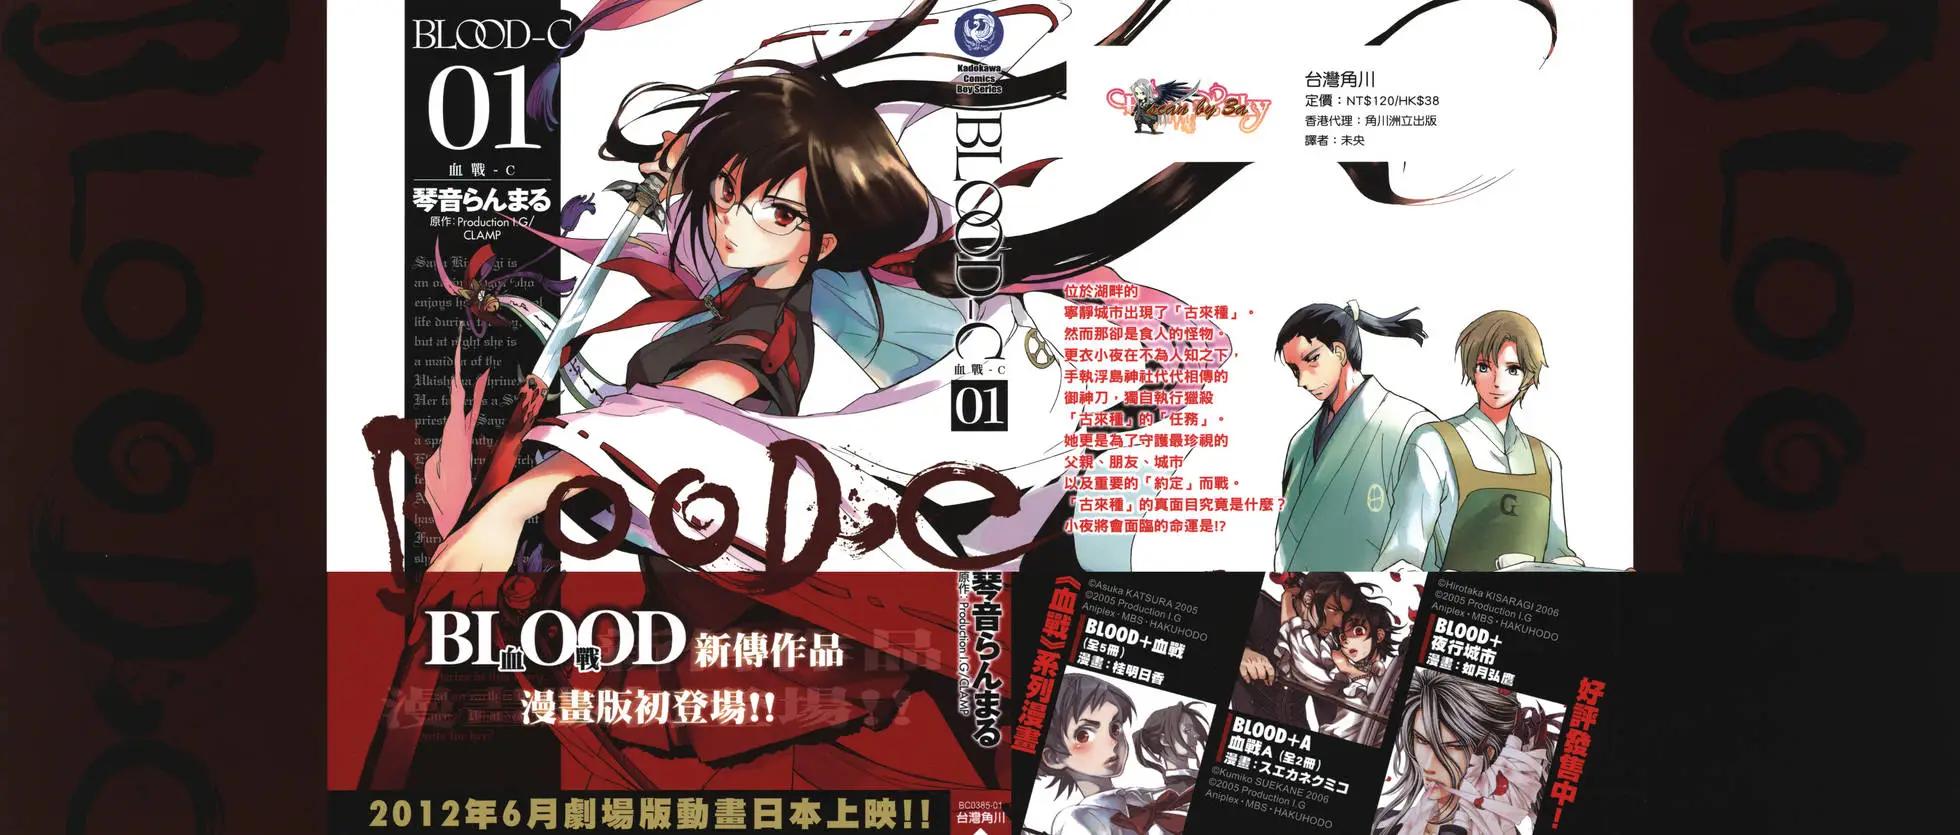 BLOOD-C - 第01卷(1/4) - 1